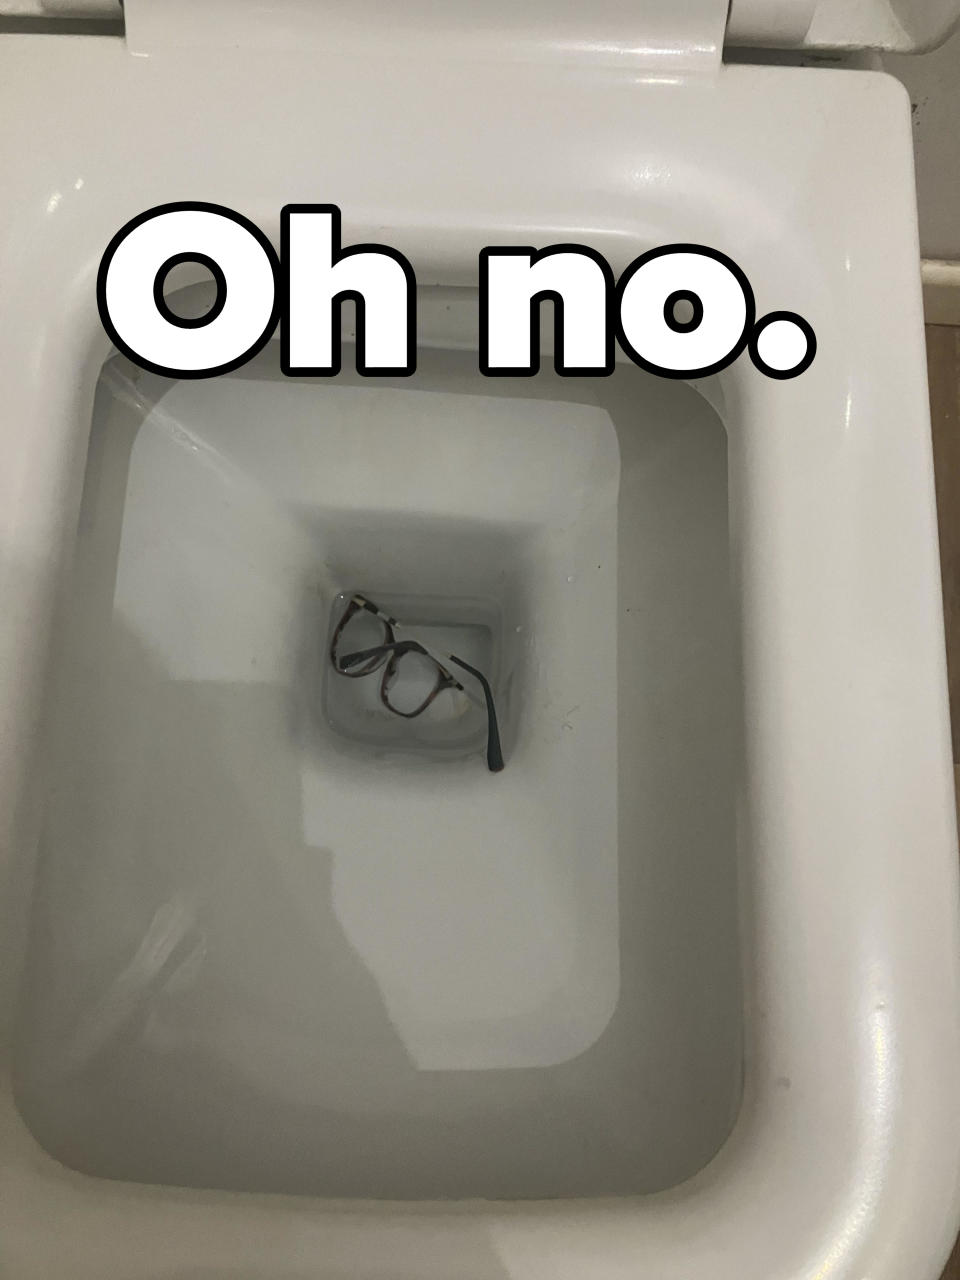 A pair of eyeglasses in the toilet